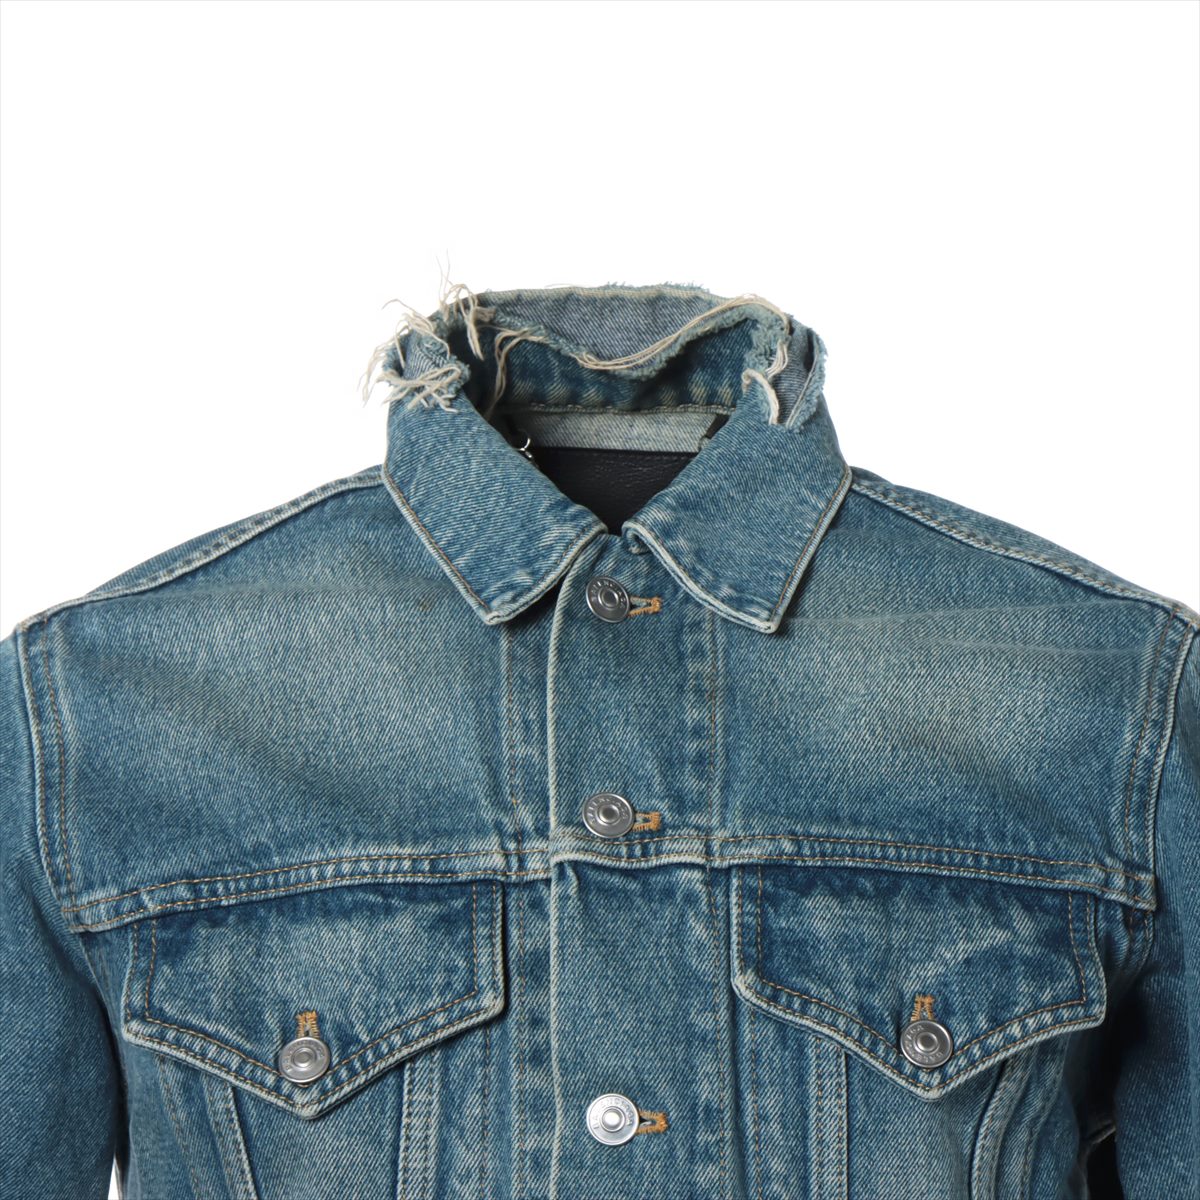 Balenciaga 17AW Cotton & nylon Denim jacket 44 Men's Blue  487342 Campaign logo embroidery Damage processing